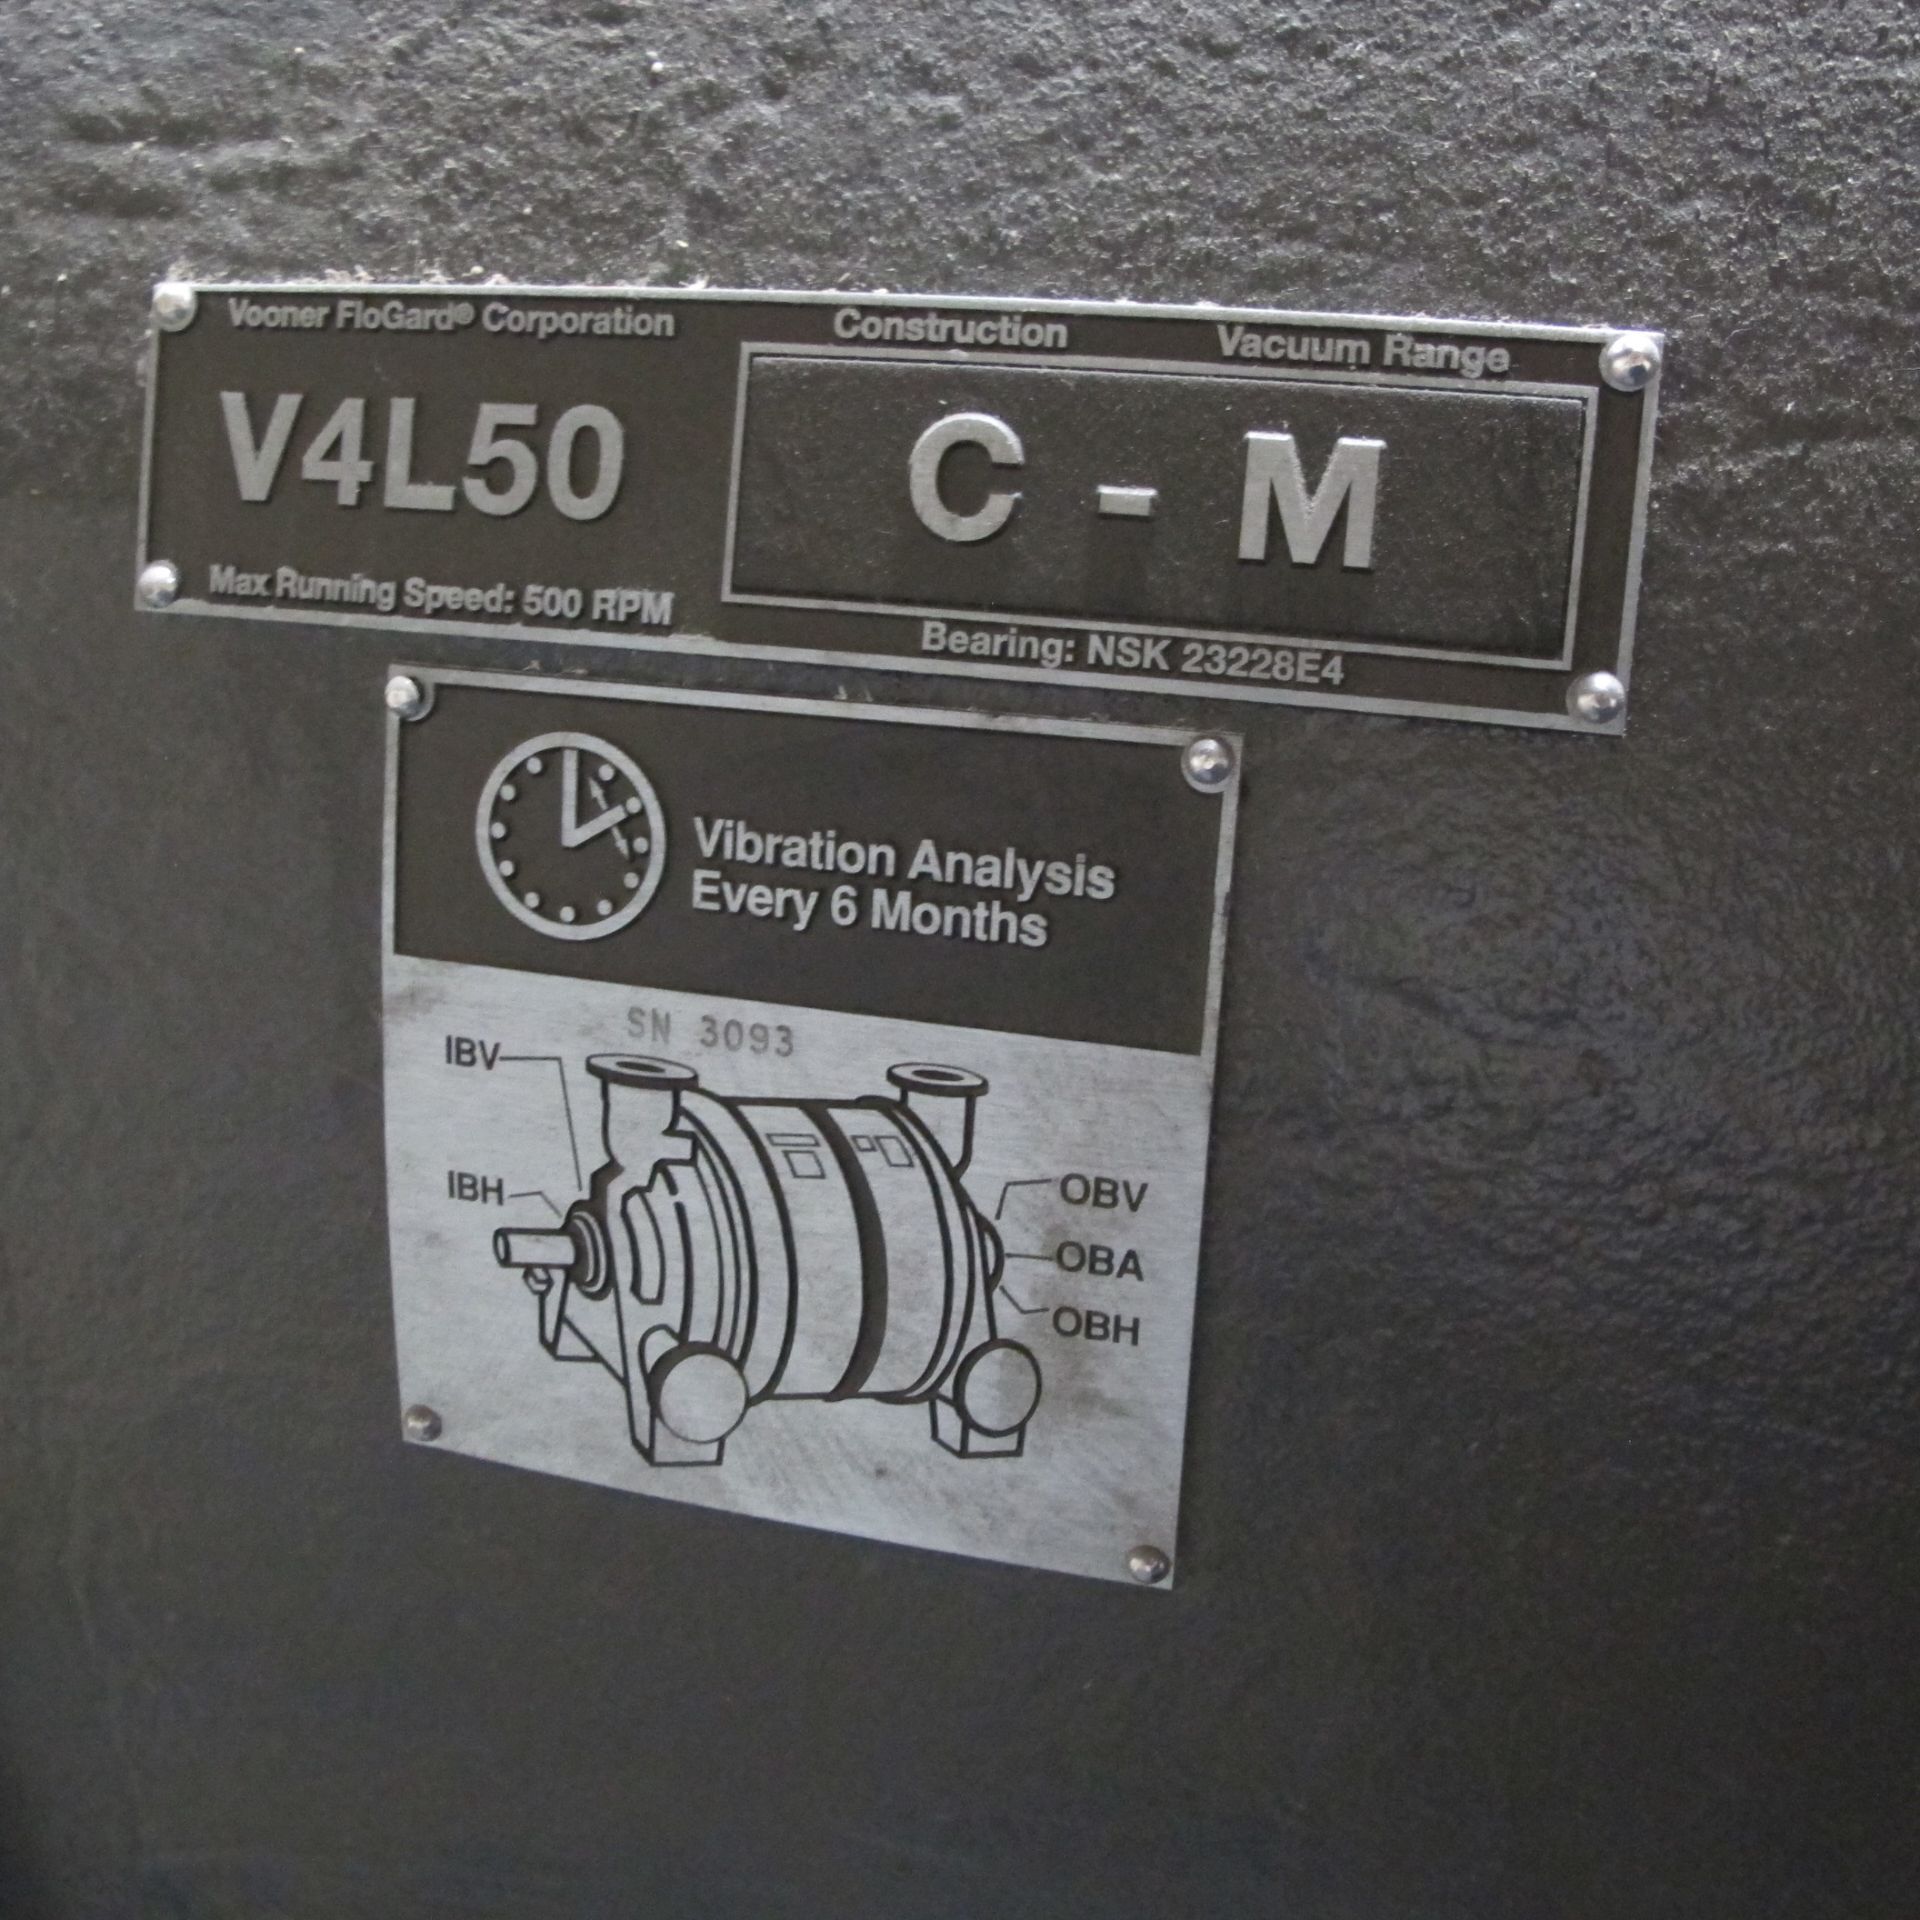 VOONER FULGARD V4L50 C-M RING VACUUM PUMP, S/N 3093 (EAST BUILDING, SOUTH WAREHOUSE) - Bild 2 aus 3